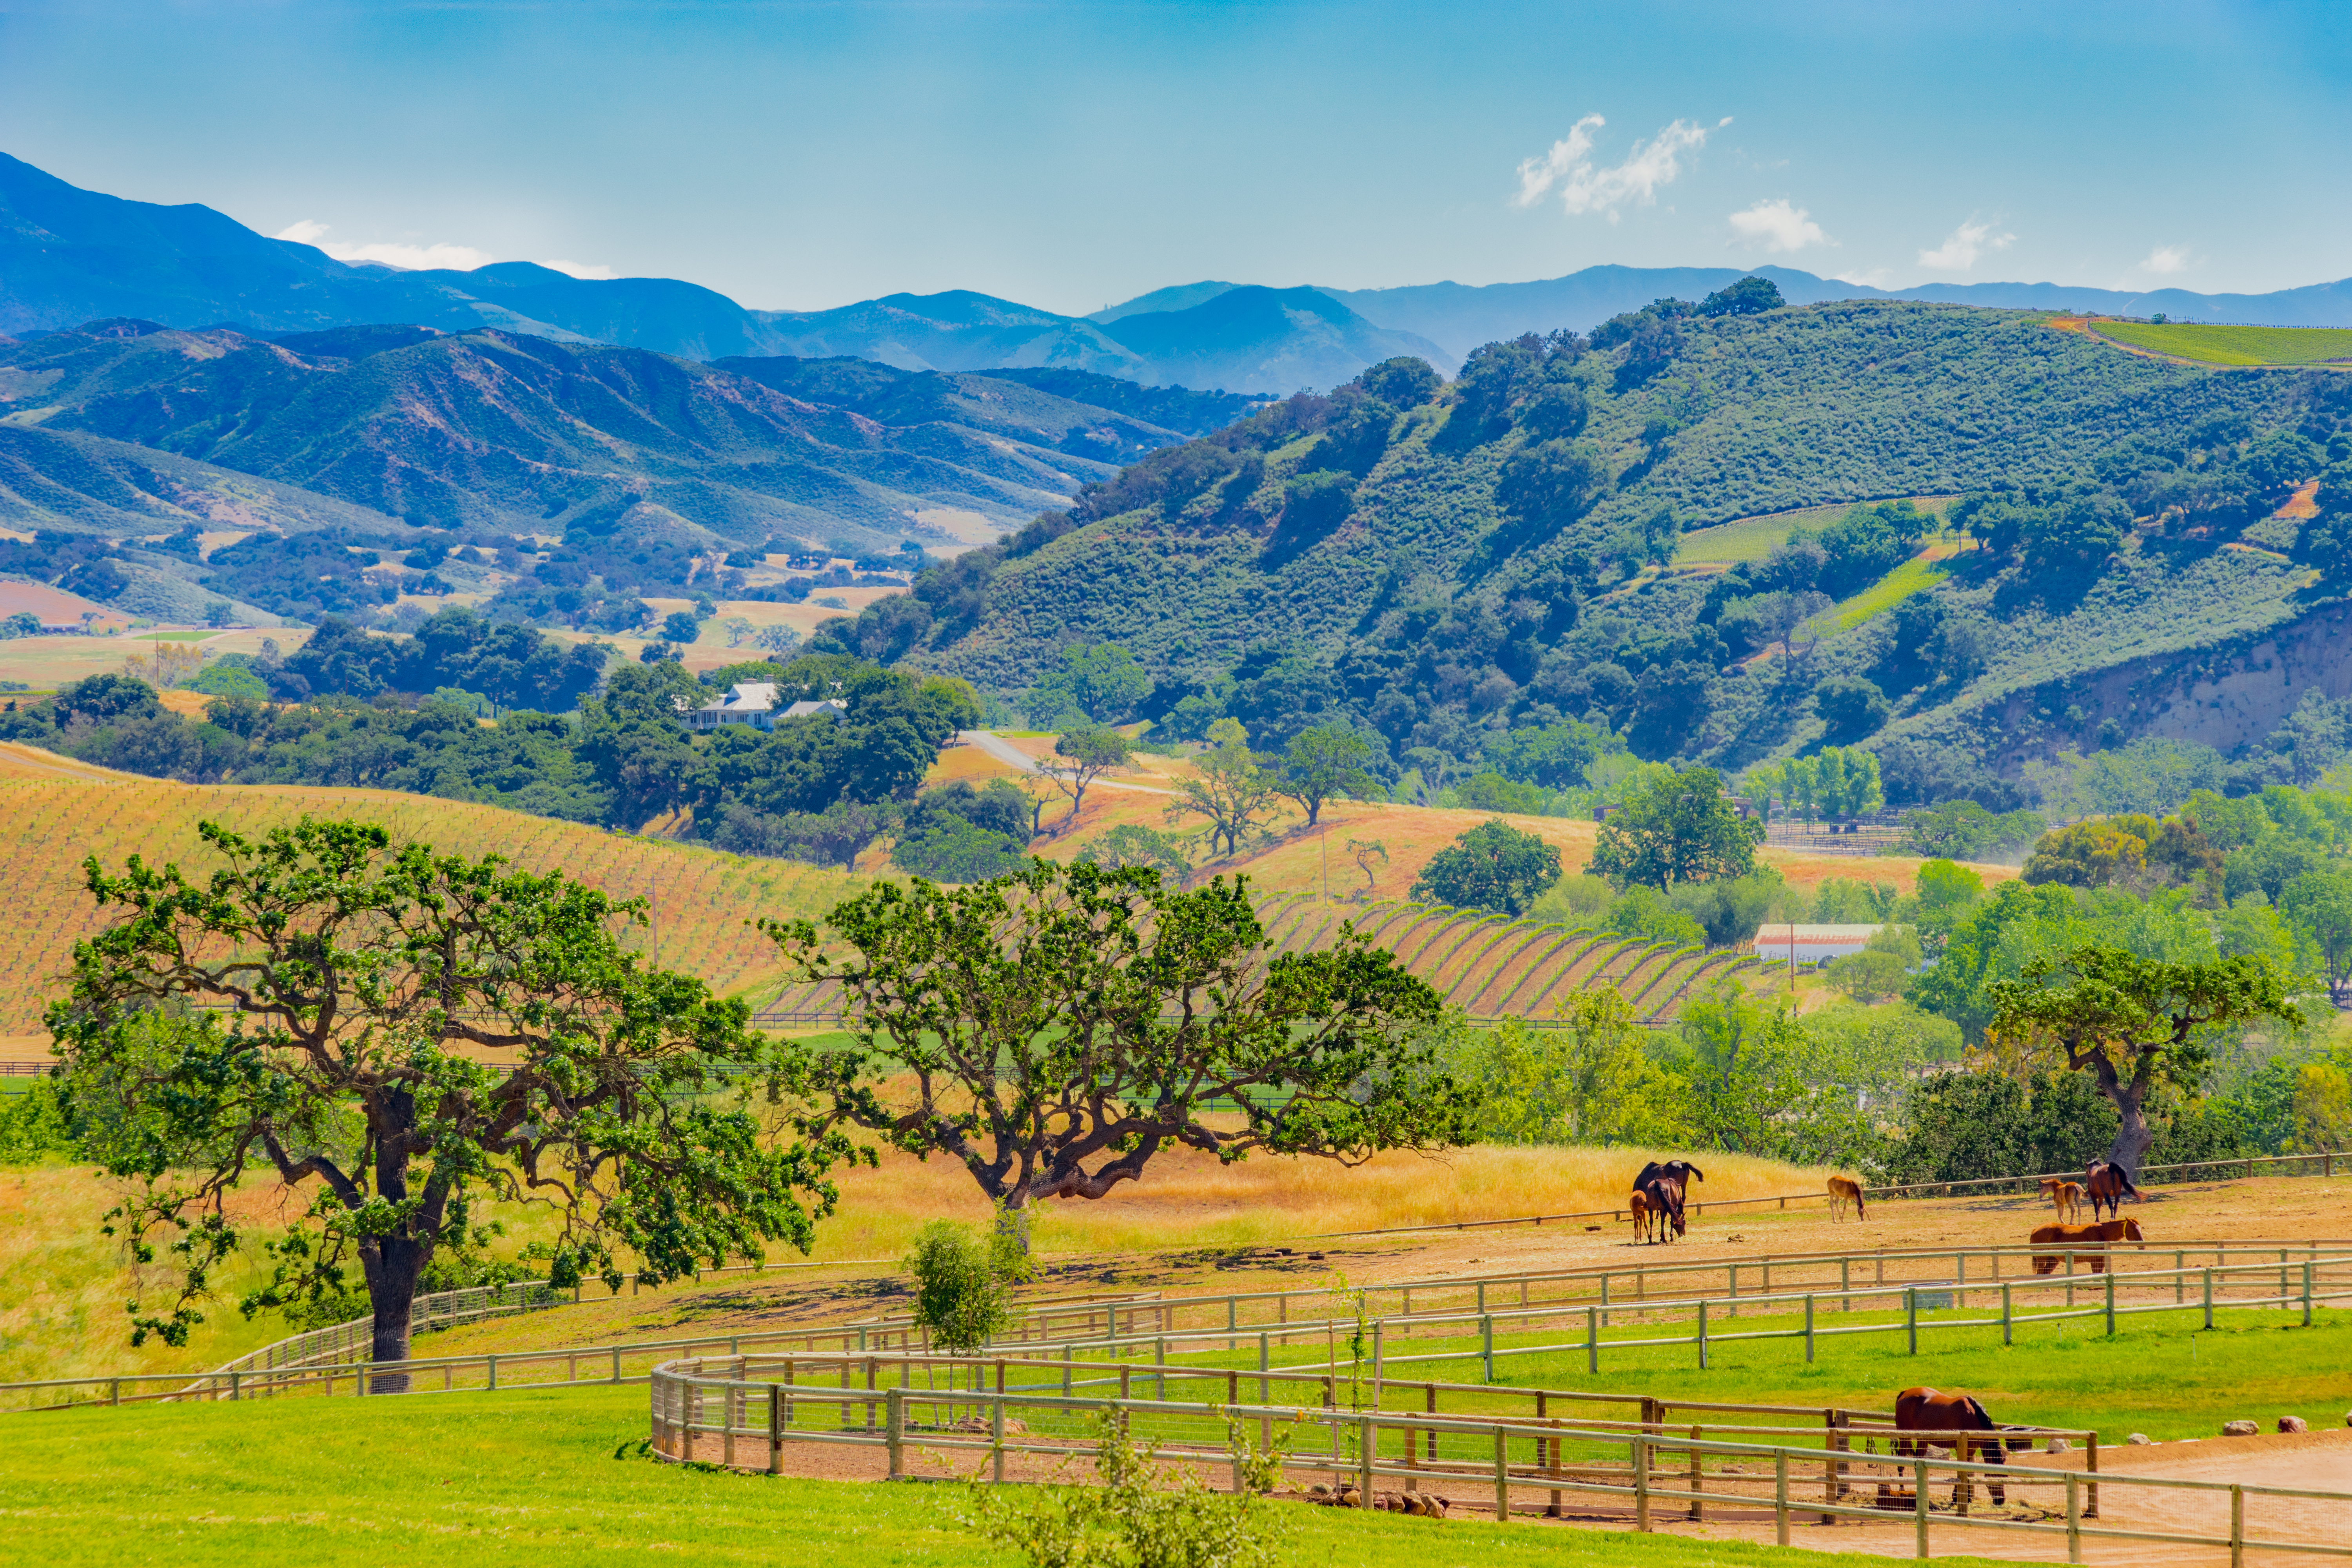 Santa Ynez Mountains Valley in Santa Barbara | Source: Getty Images